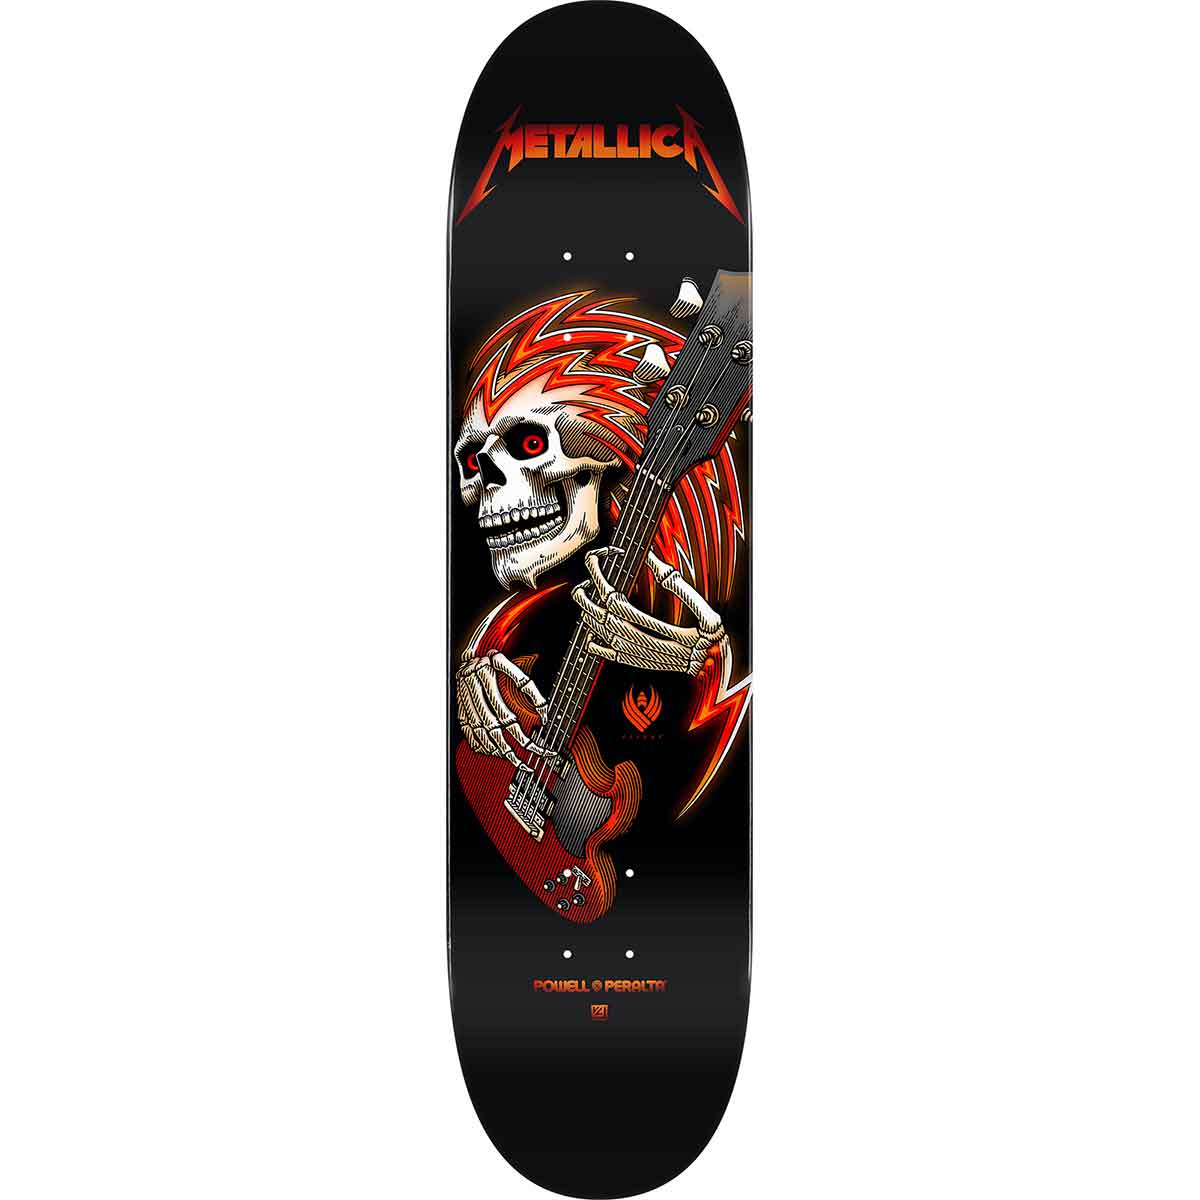 Powell Peralta Metallica Collab Flight 243 Skateboard Deck Black 8.25x31.95 | SoCal Skateshop